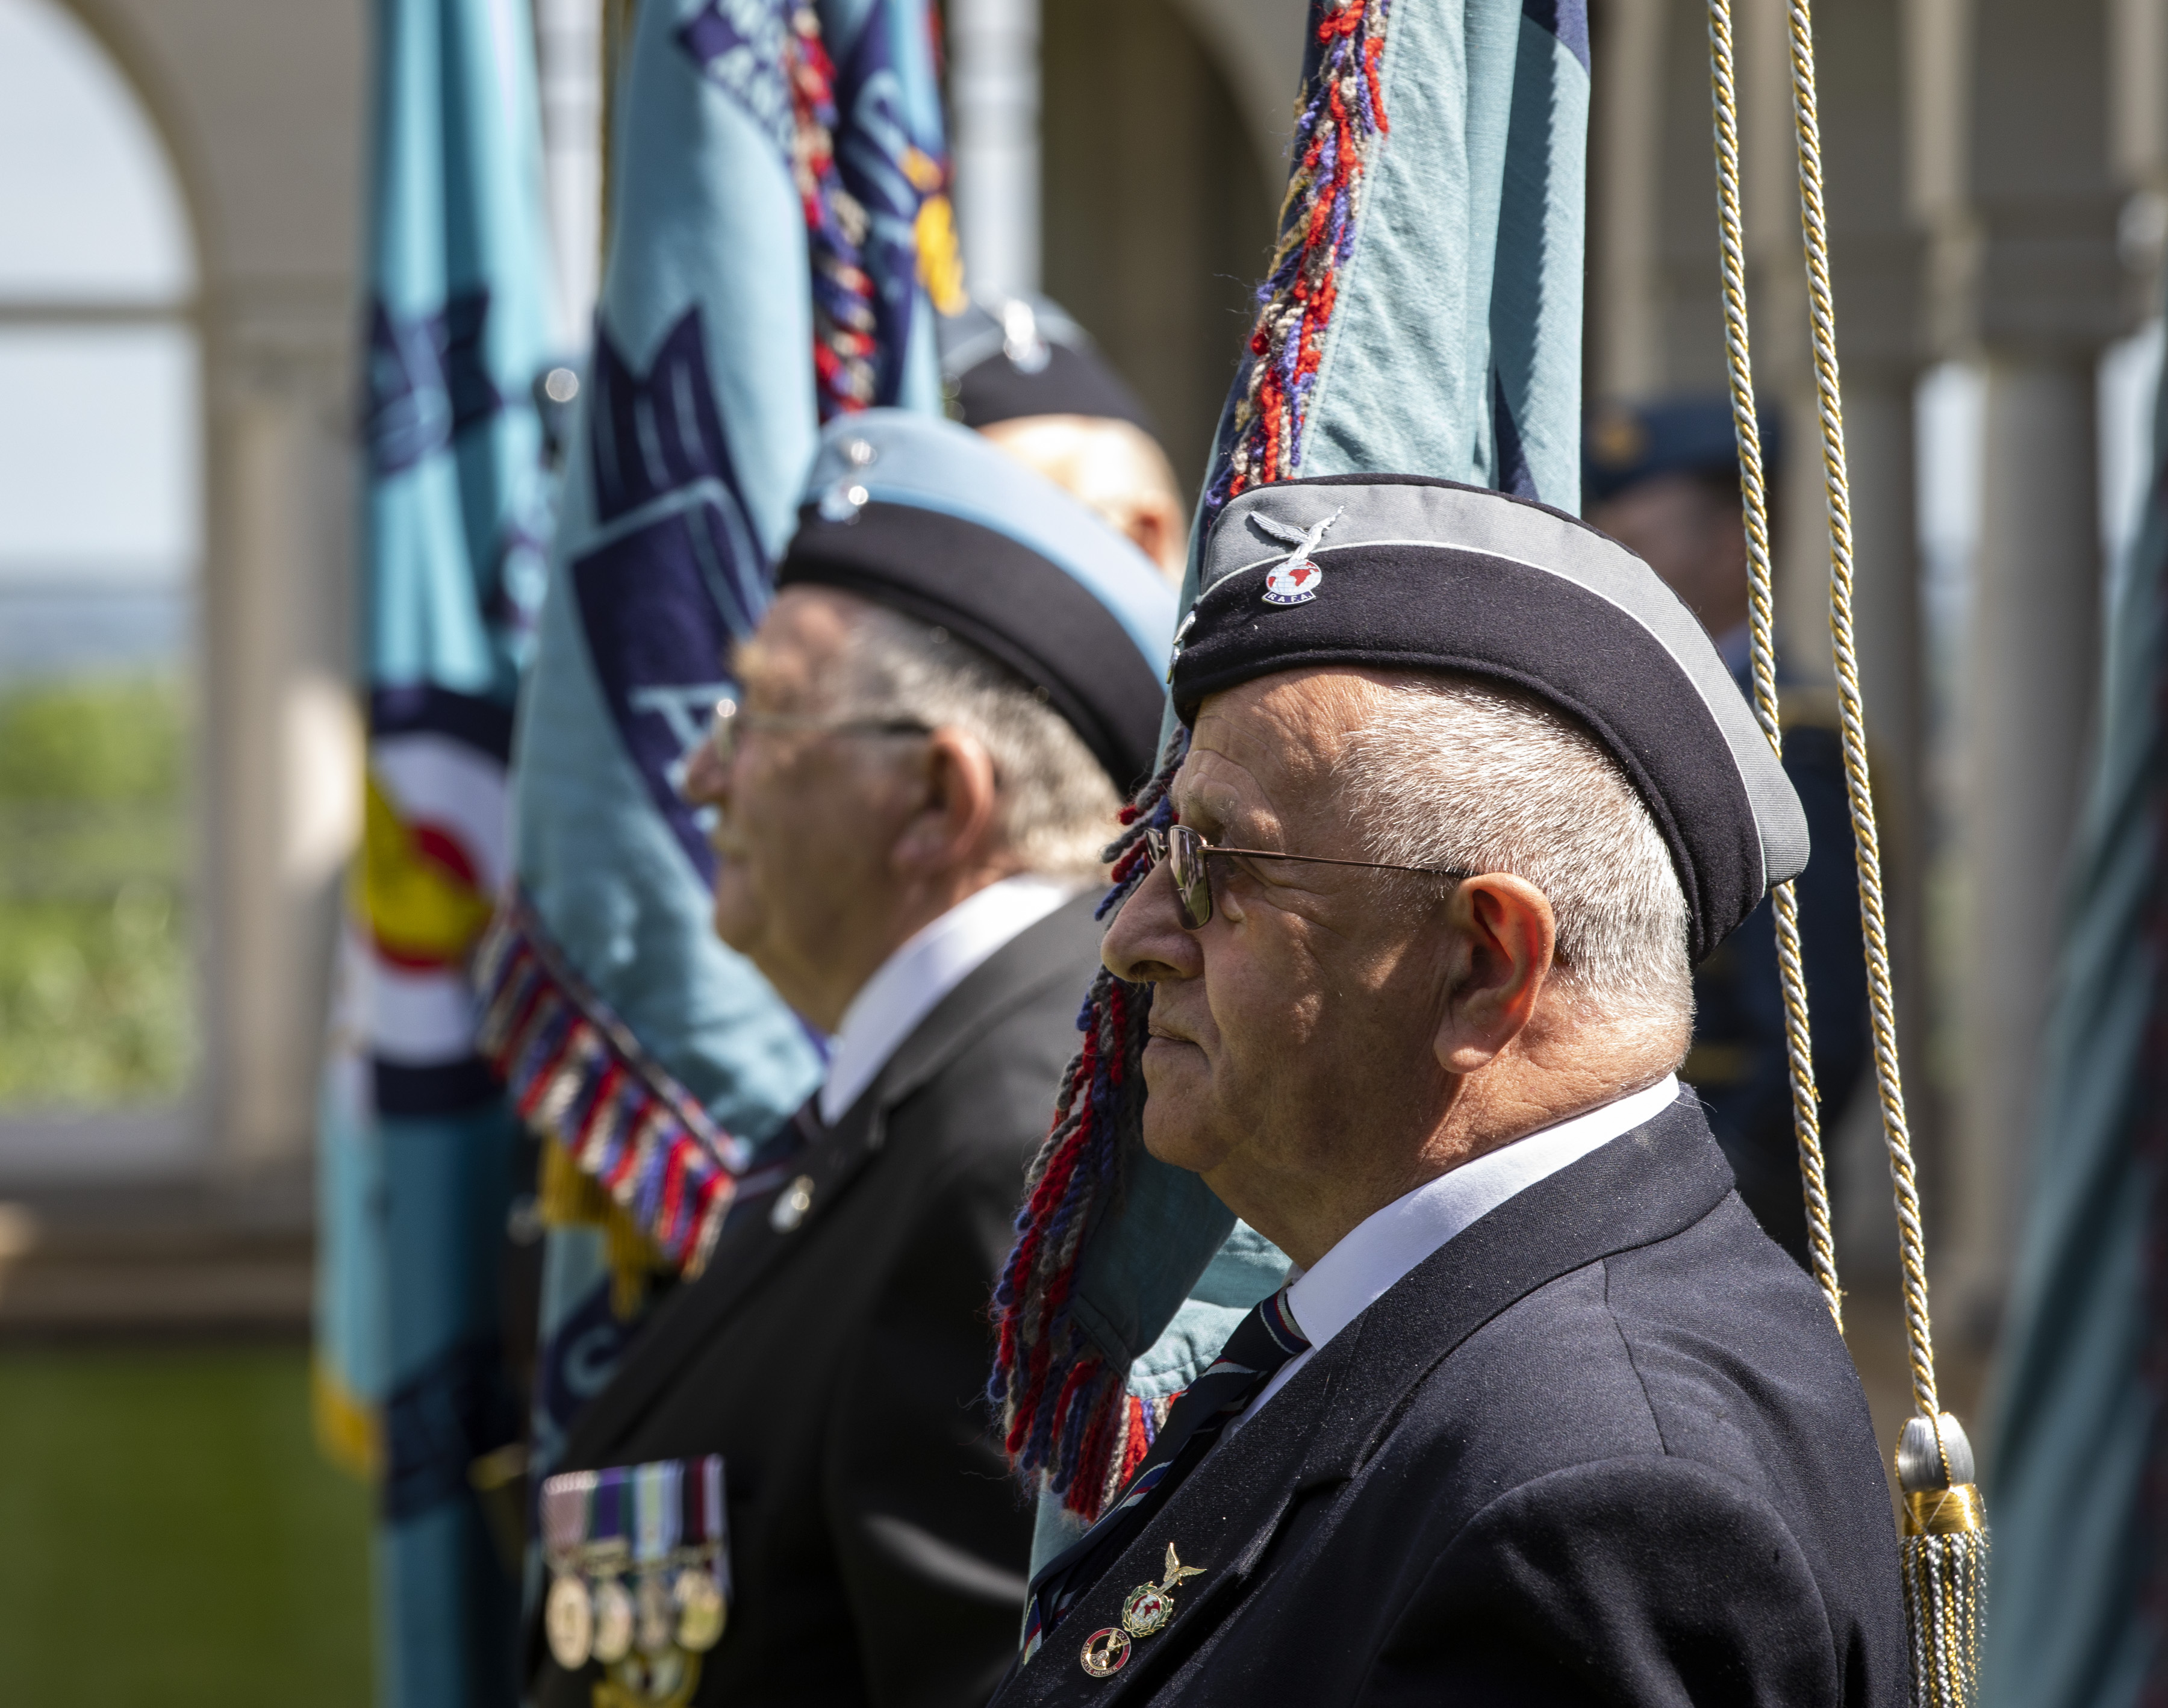 RAF veterans carry Colour flags.